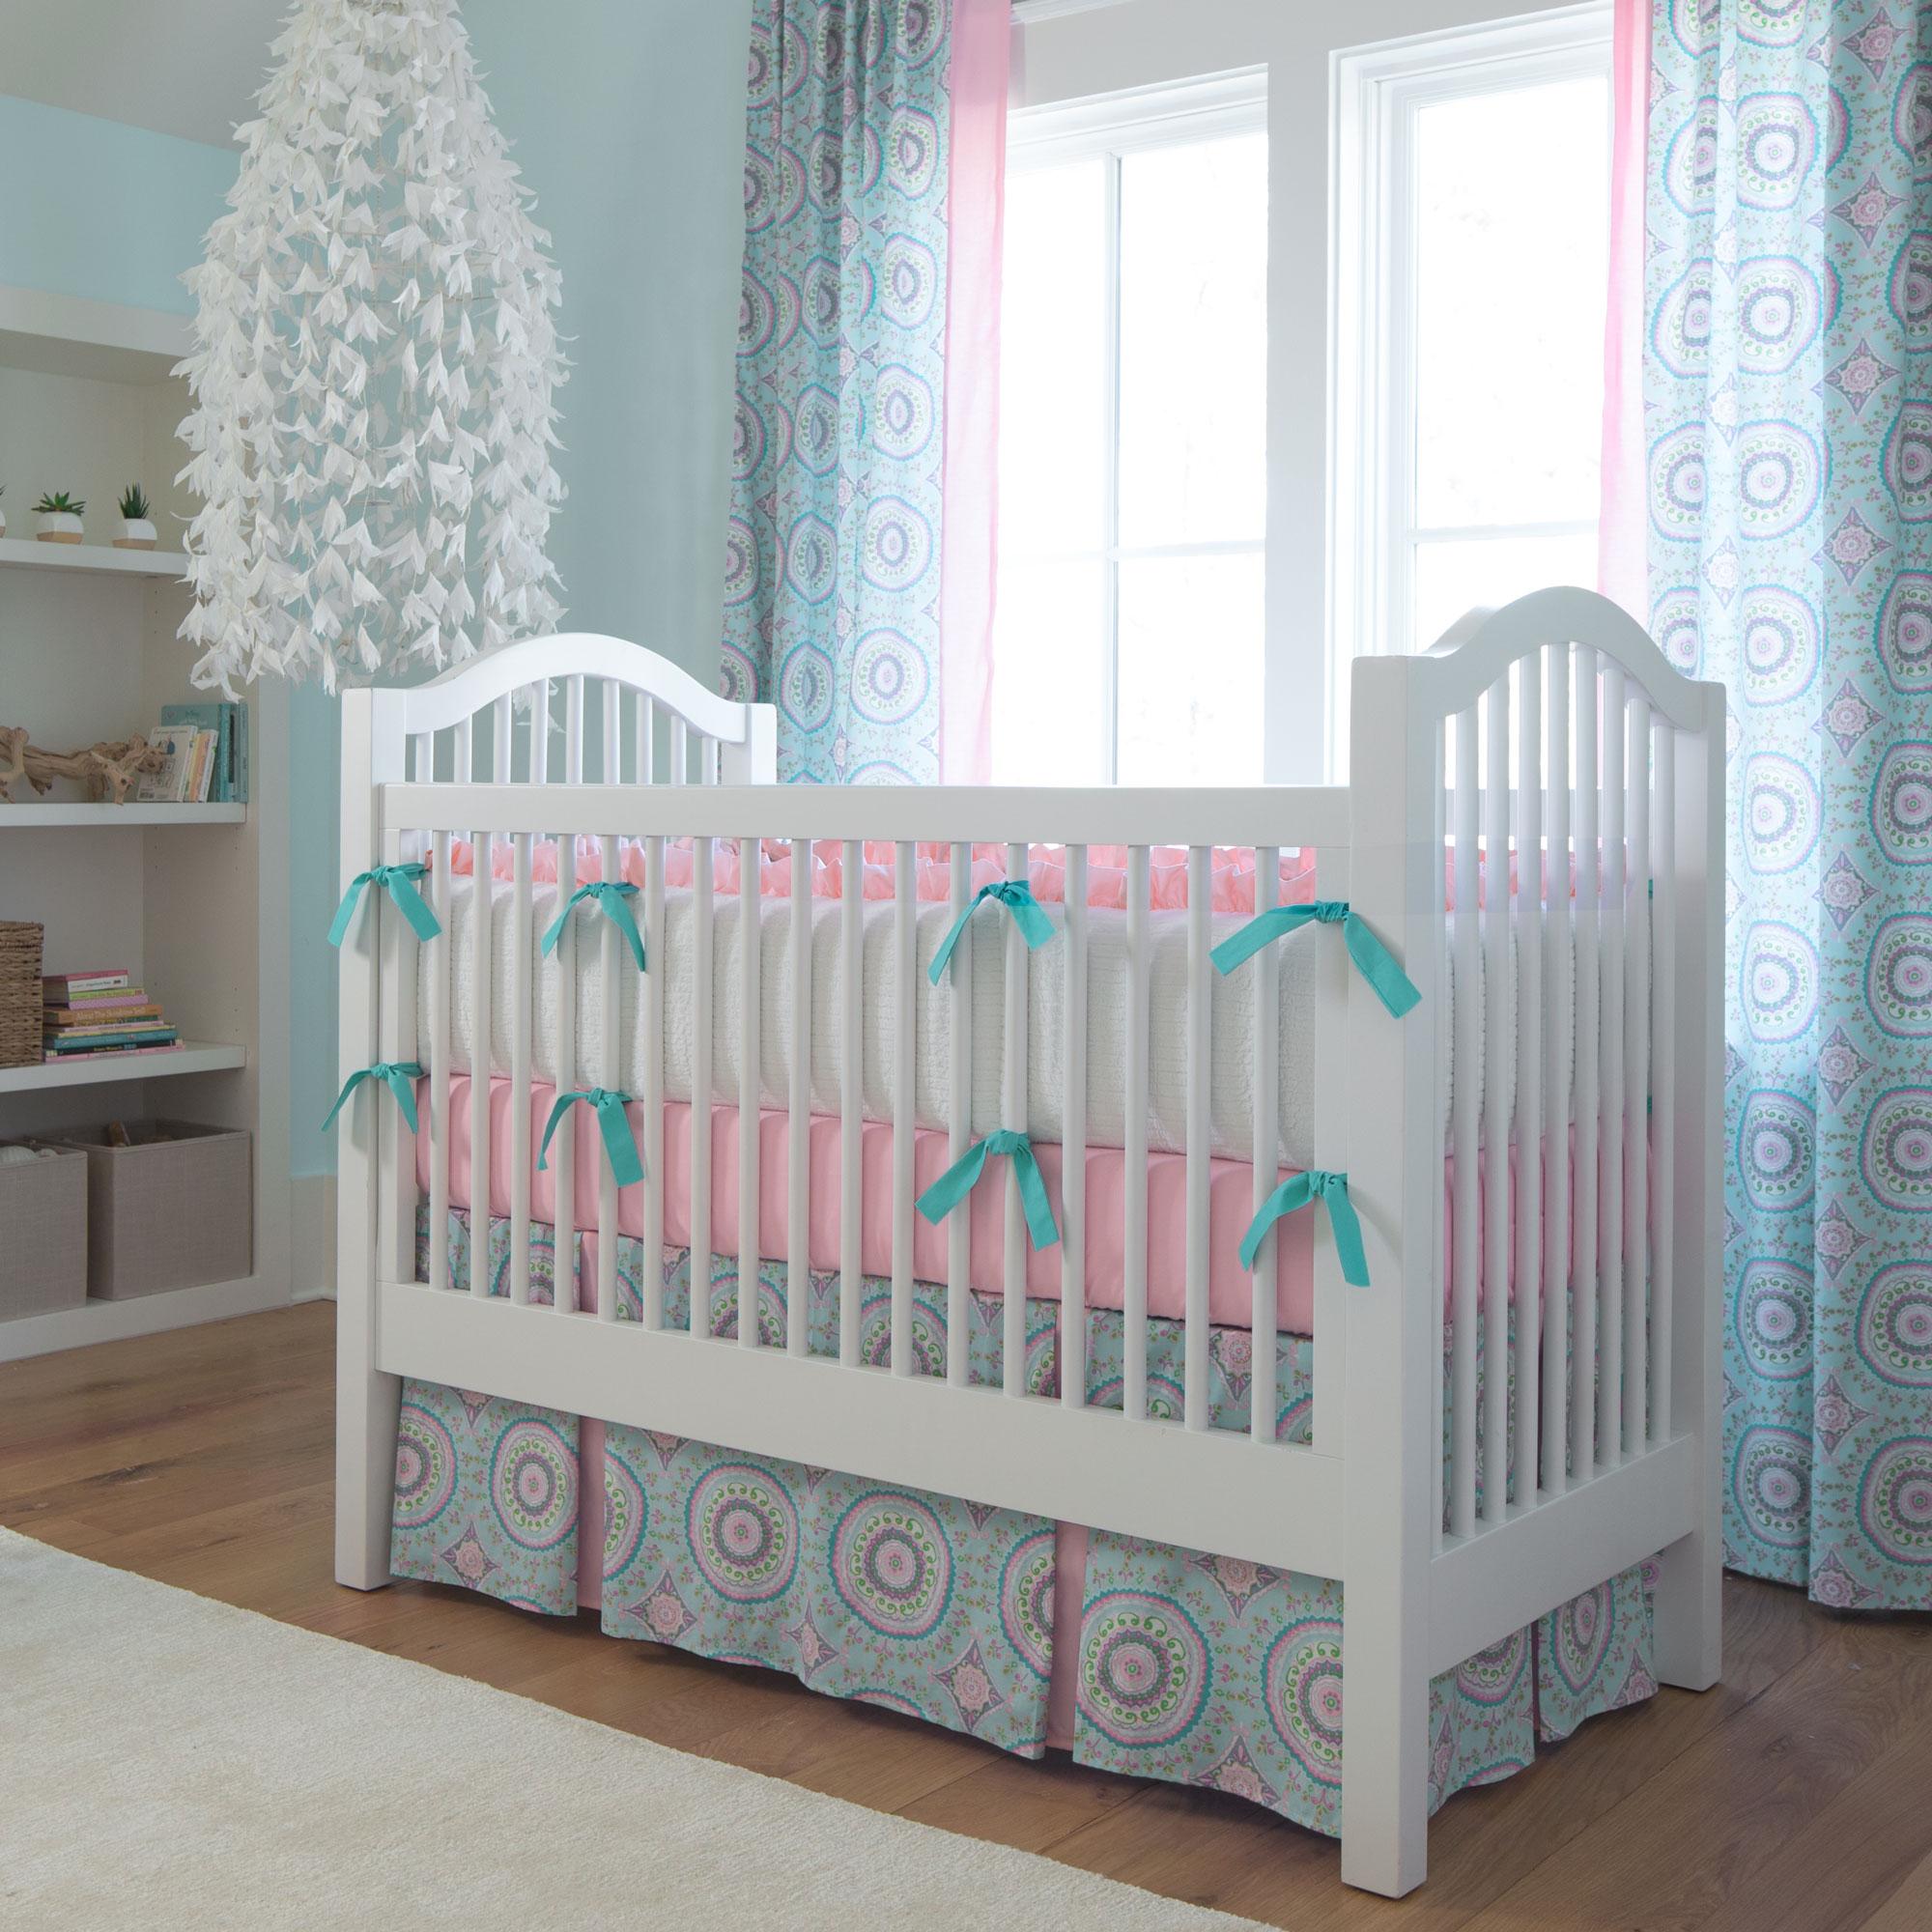 Aqua Haute Baby Crib Bedding | Carousel Designs